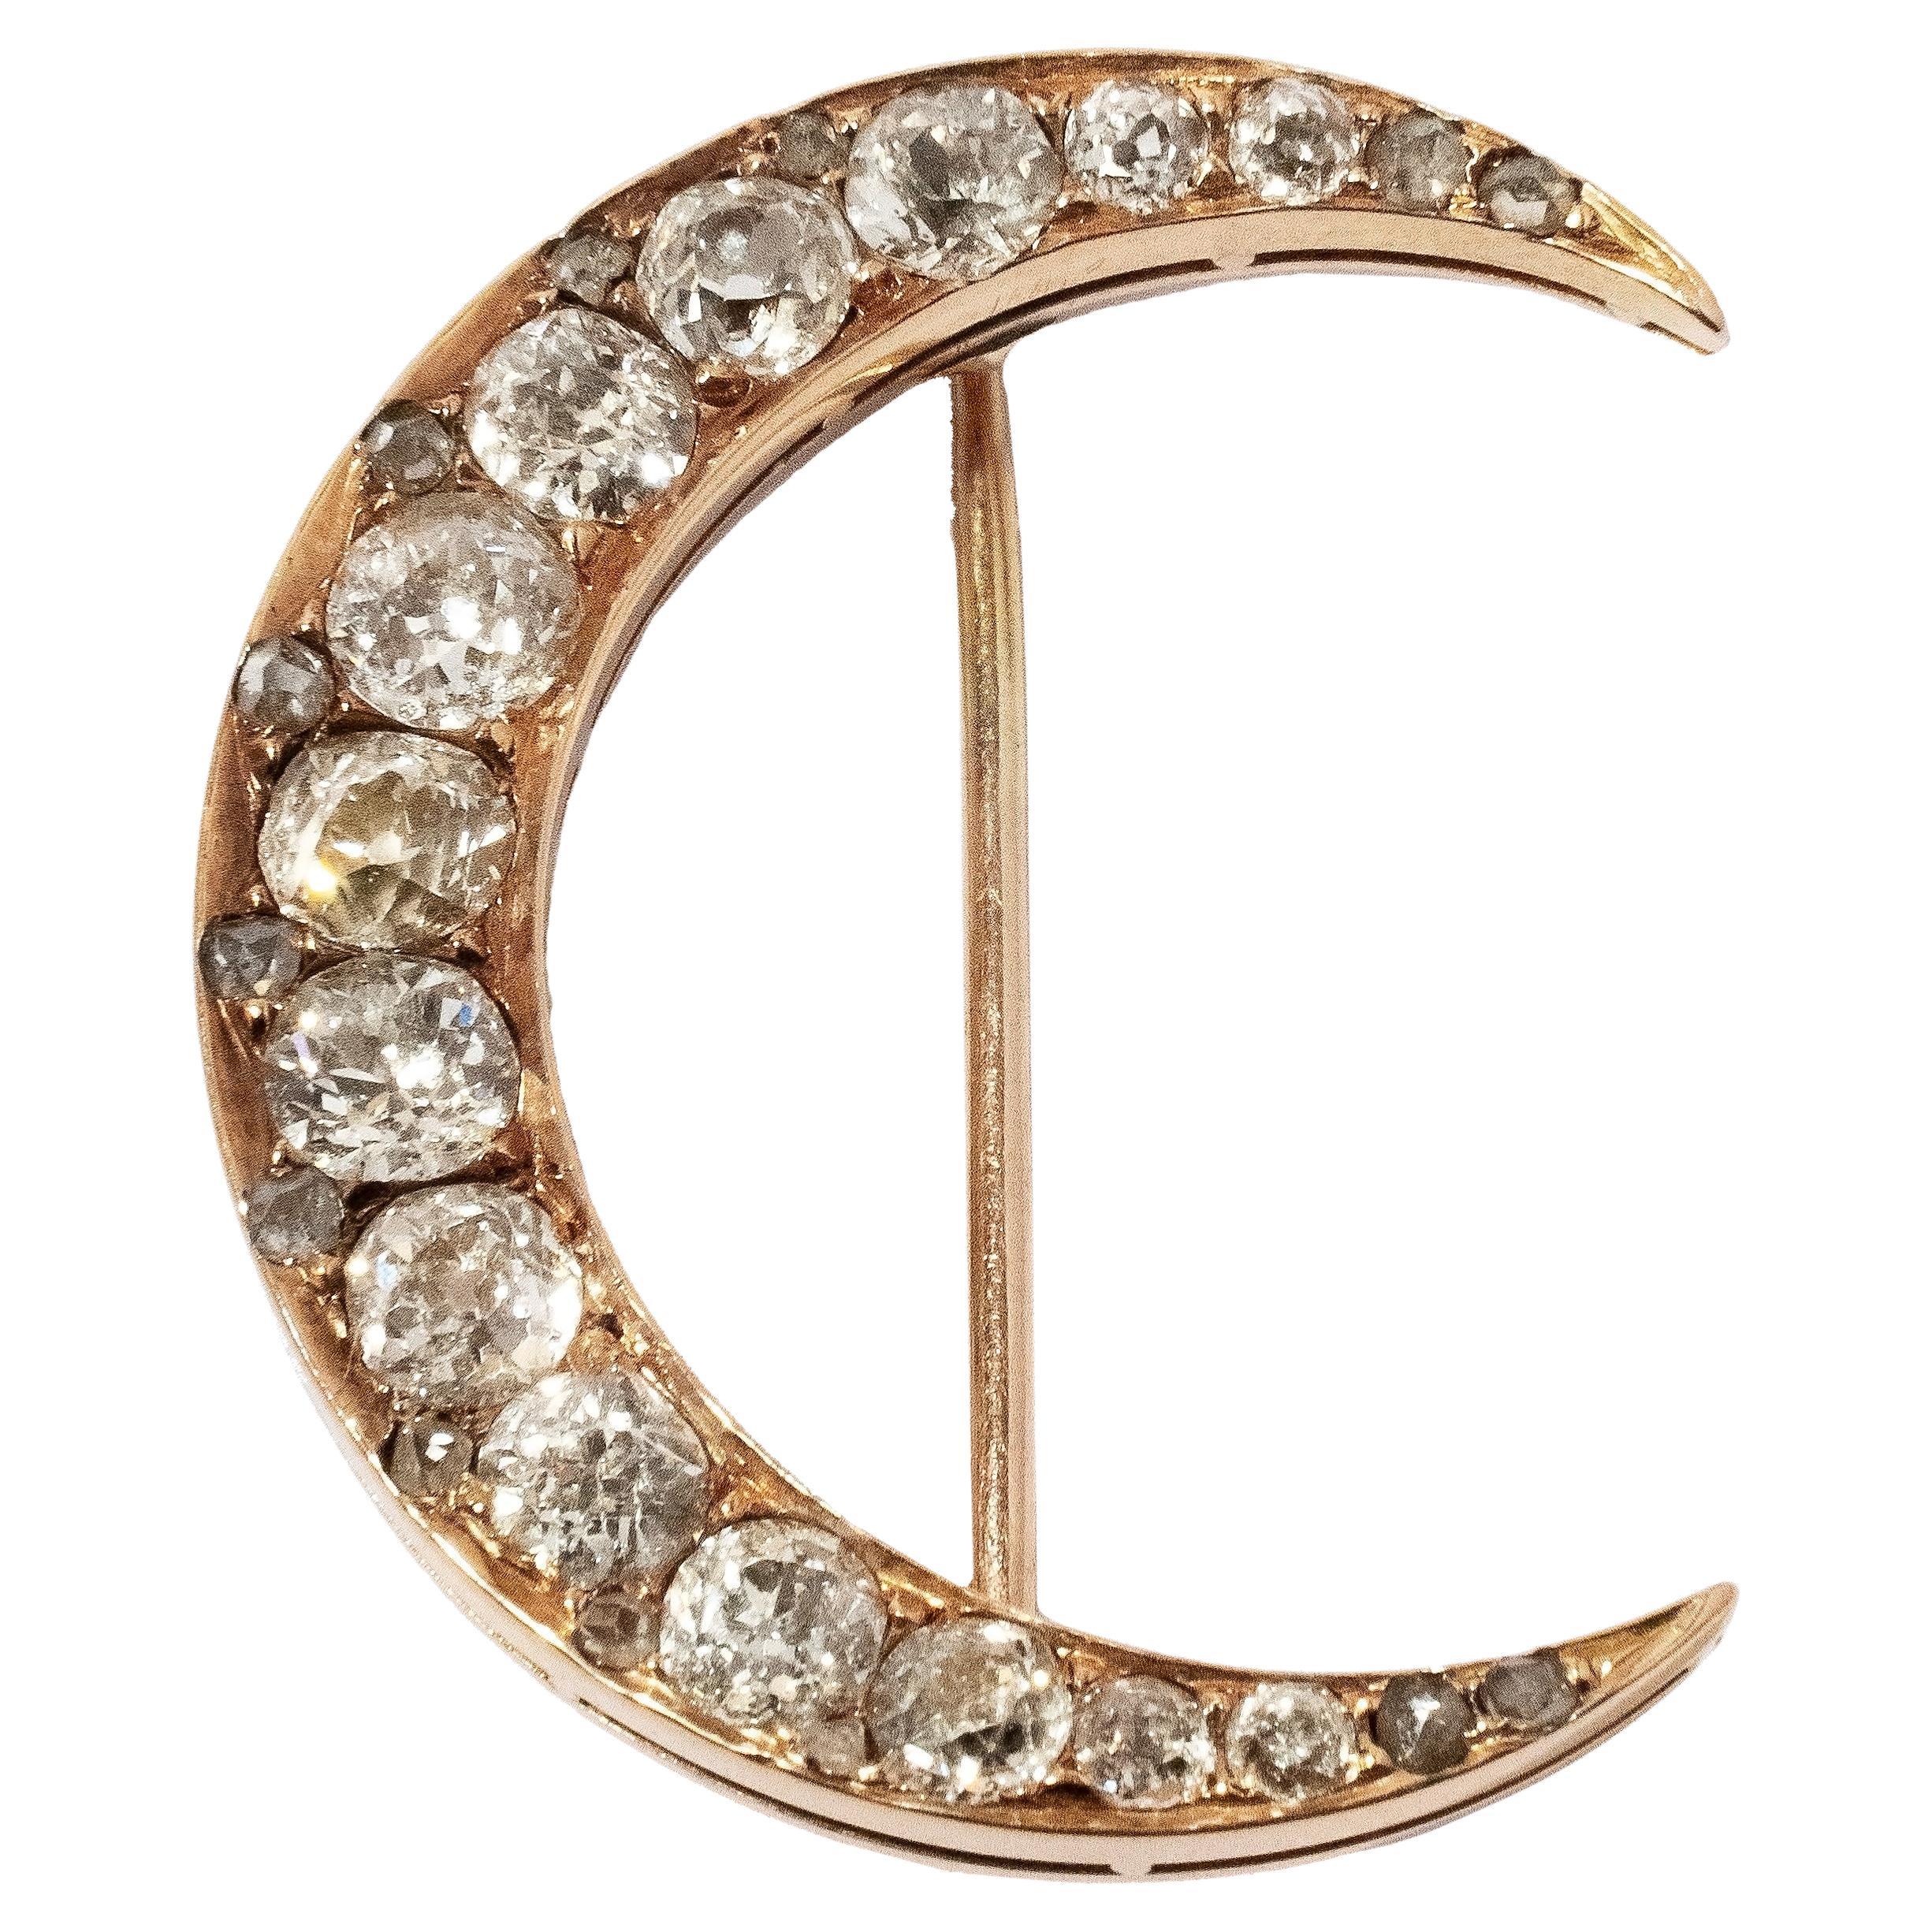  19th Century Antique Diamond encrusted Crescent Moon Brooch